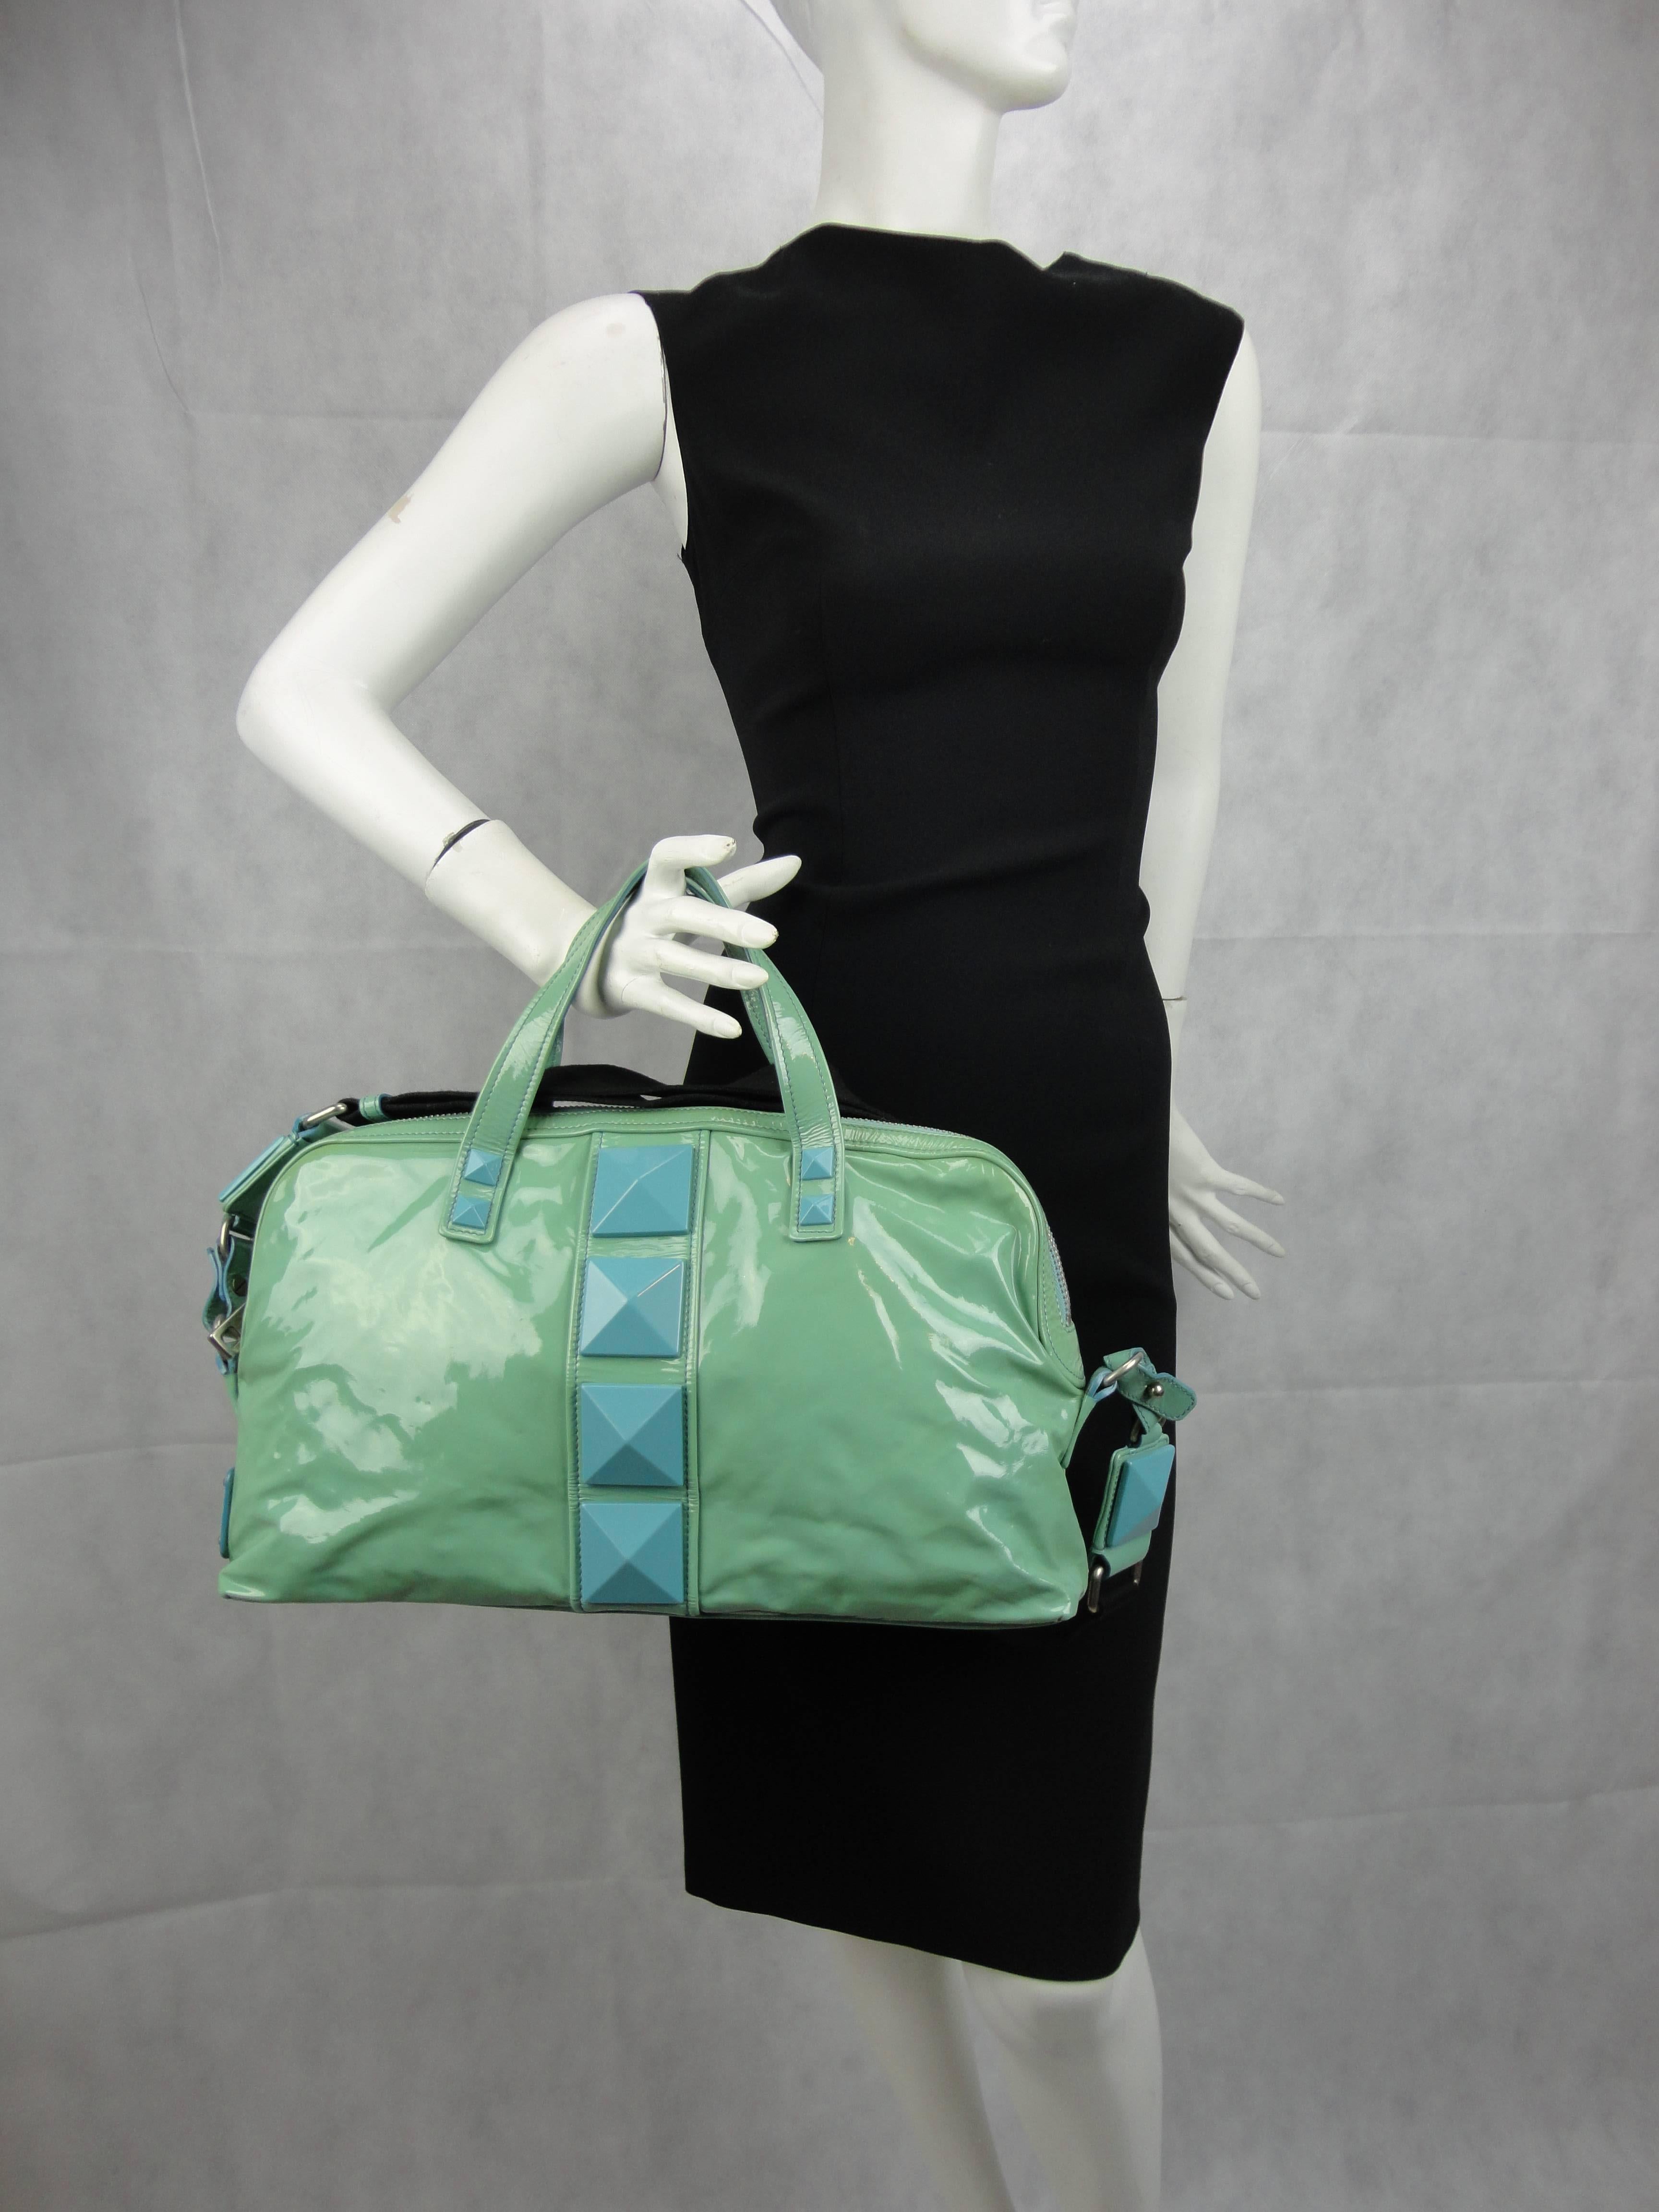 Marc Jacobs Aqua Patent Leather Bag 2